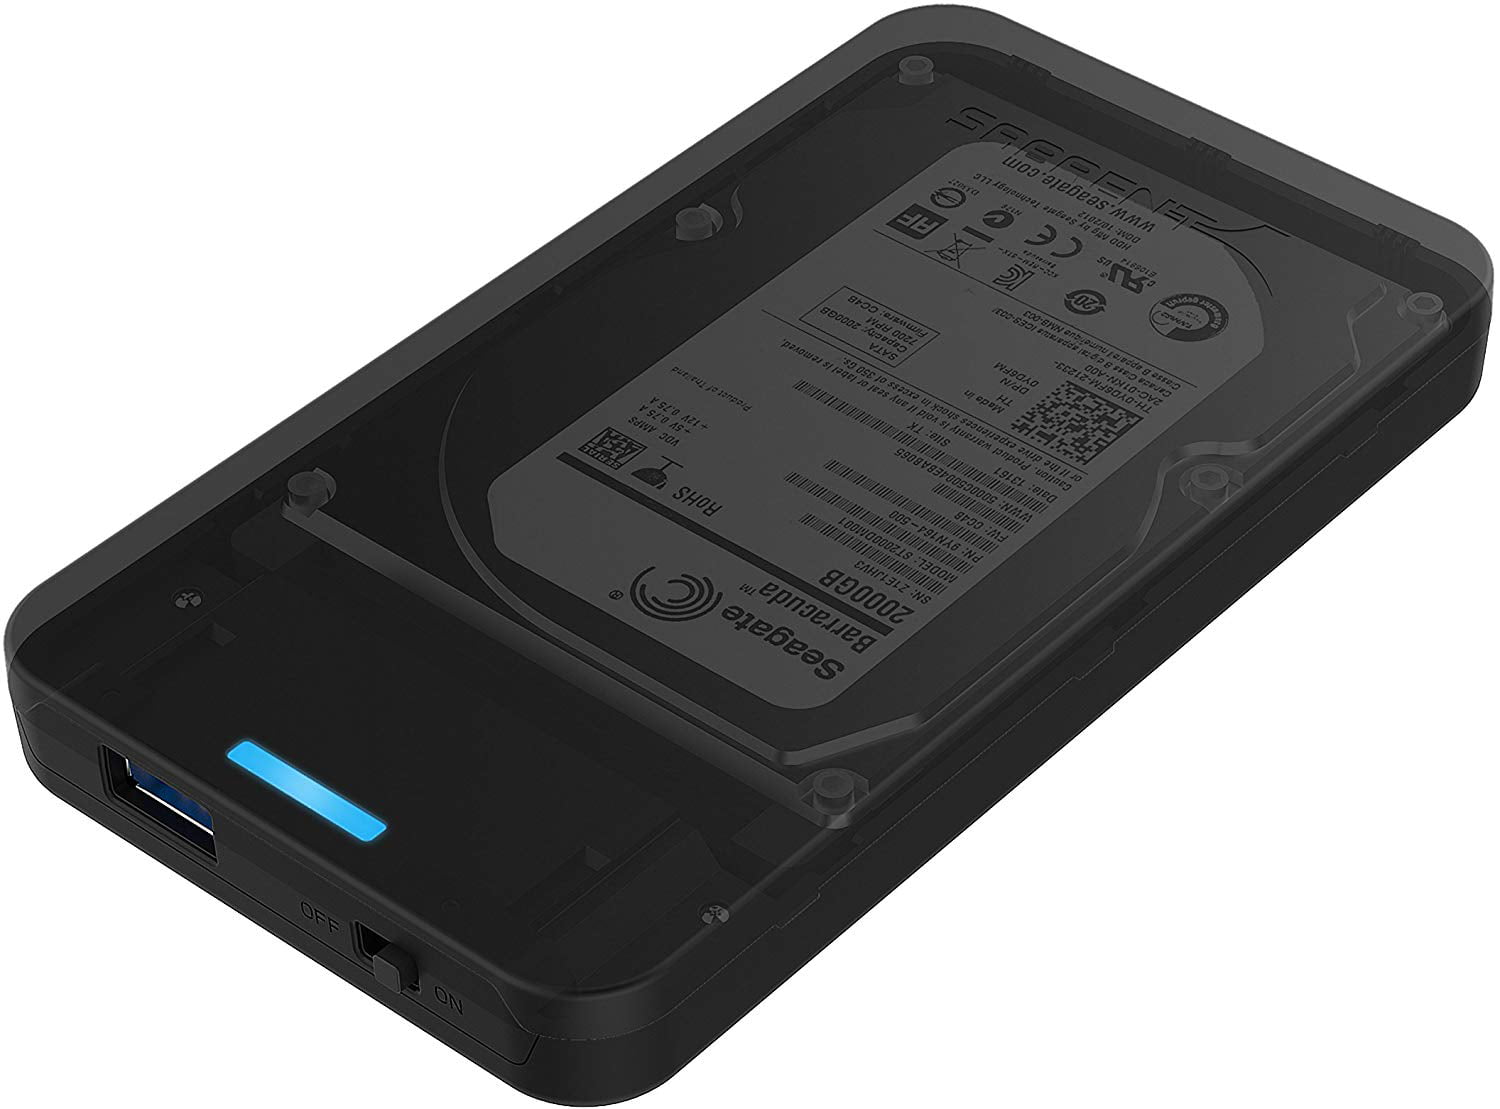 Bipra 2.5 inch USB 3.0 NTFS Portable Slim External Hard Drive 